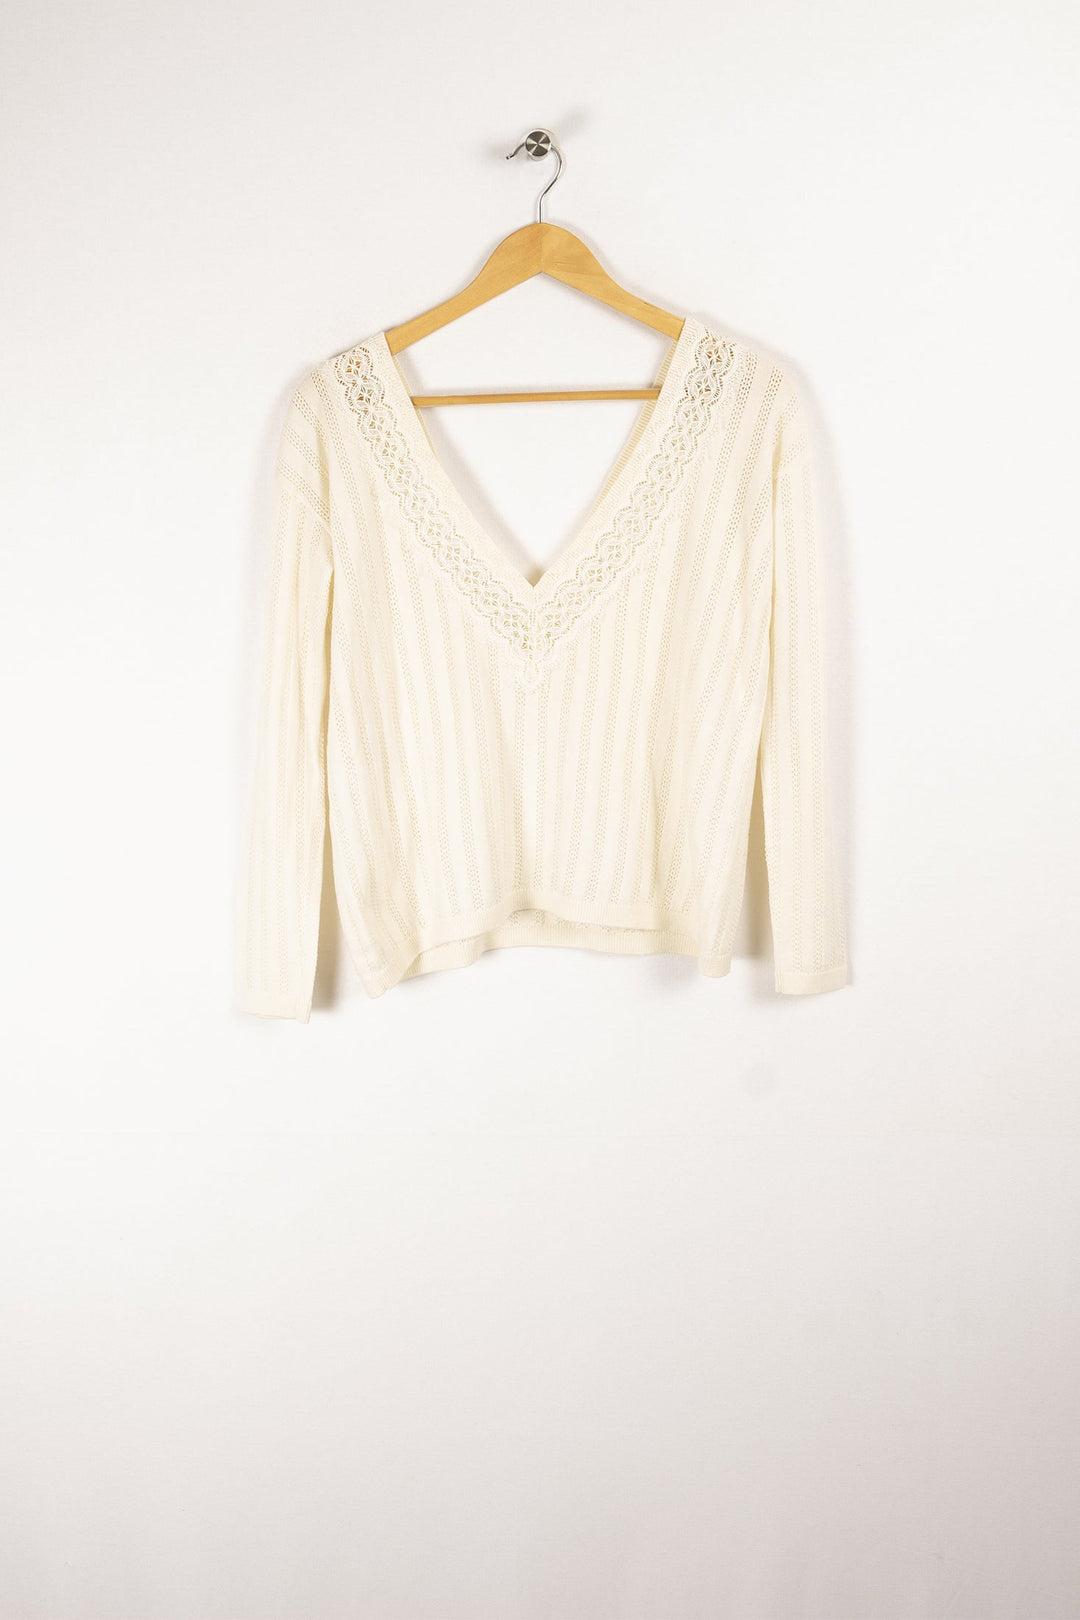 Sweater - XS / 34